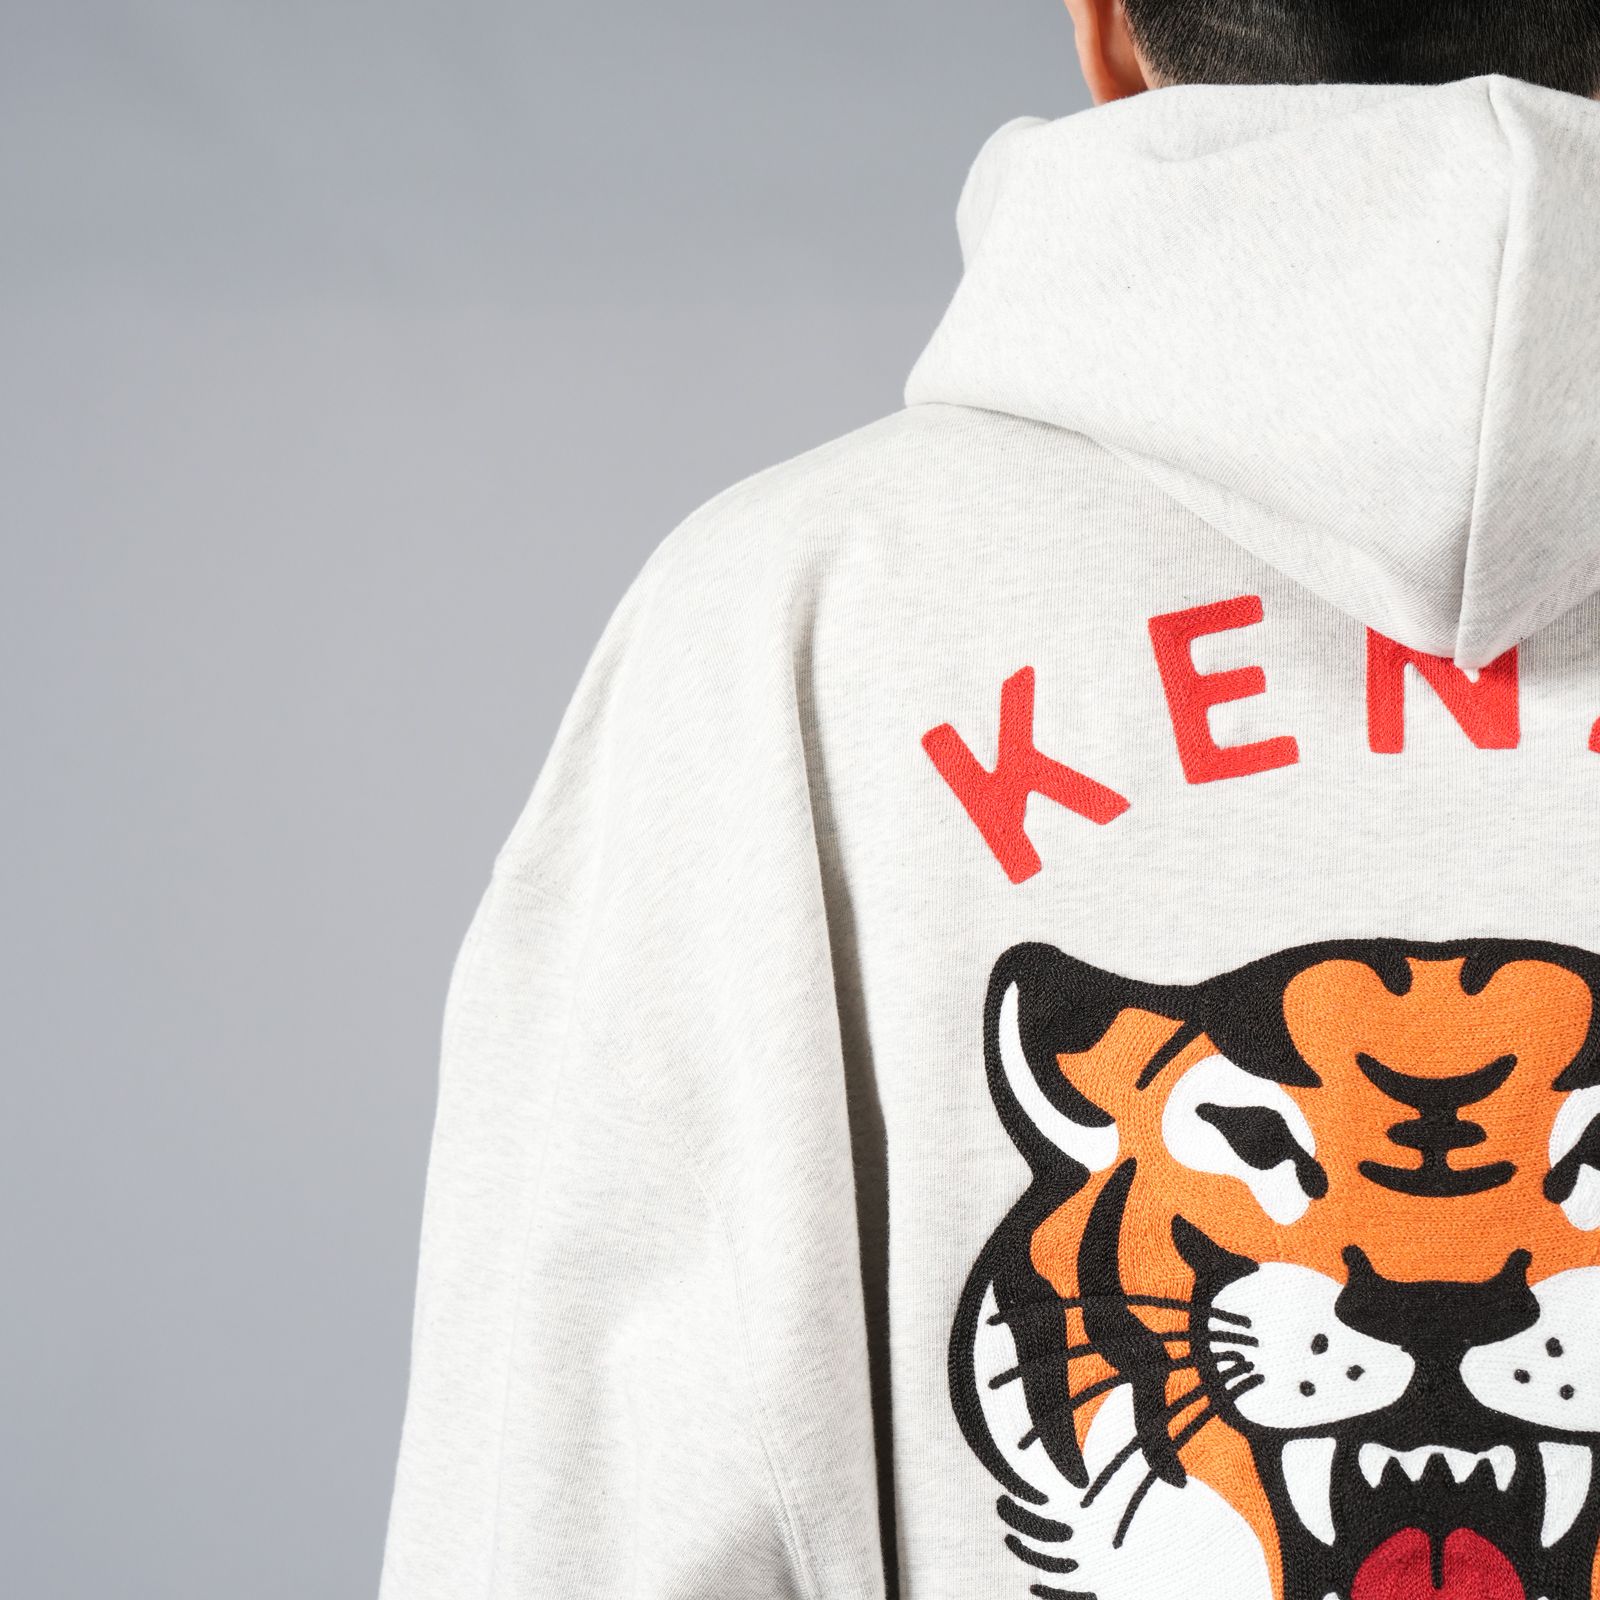 KENZO - 【ラスト1点】 'KENZO LUCKY TIGER' フーディー / パーカー 